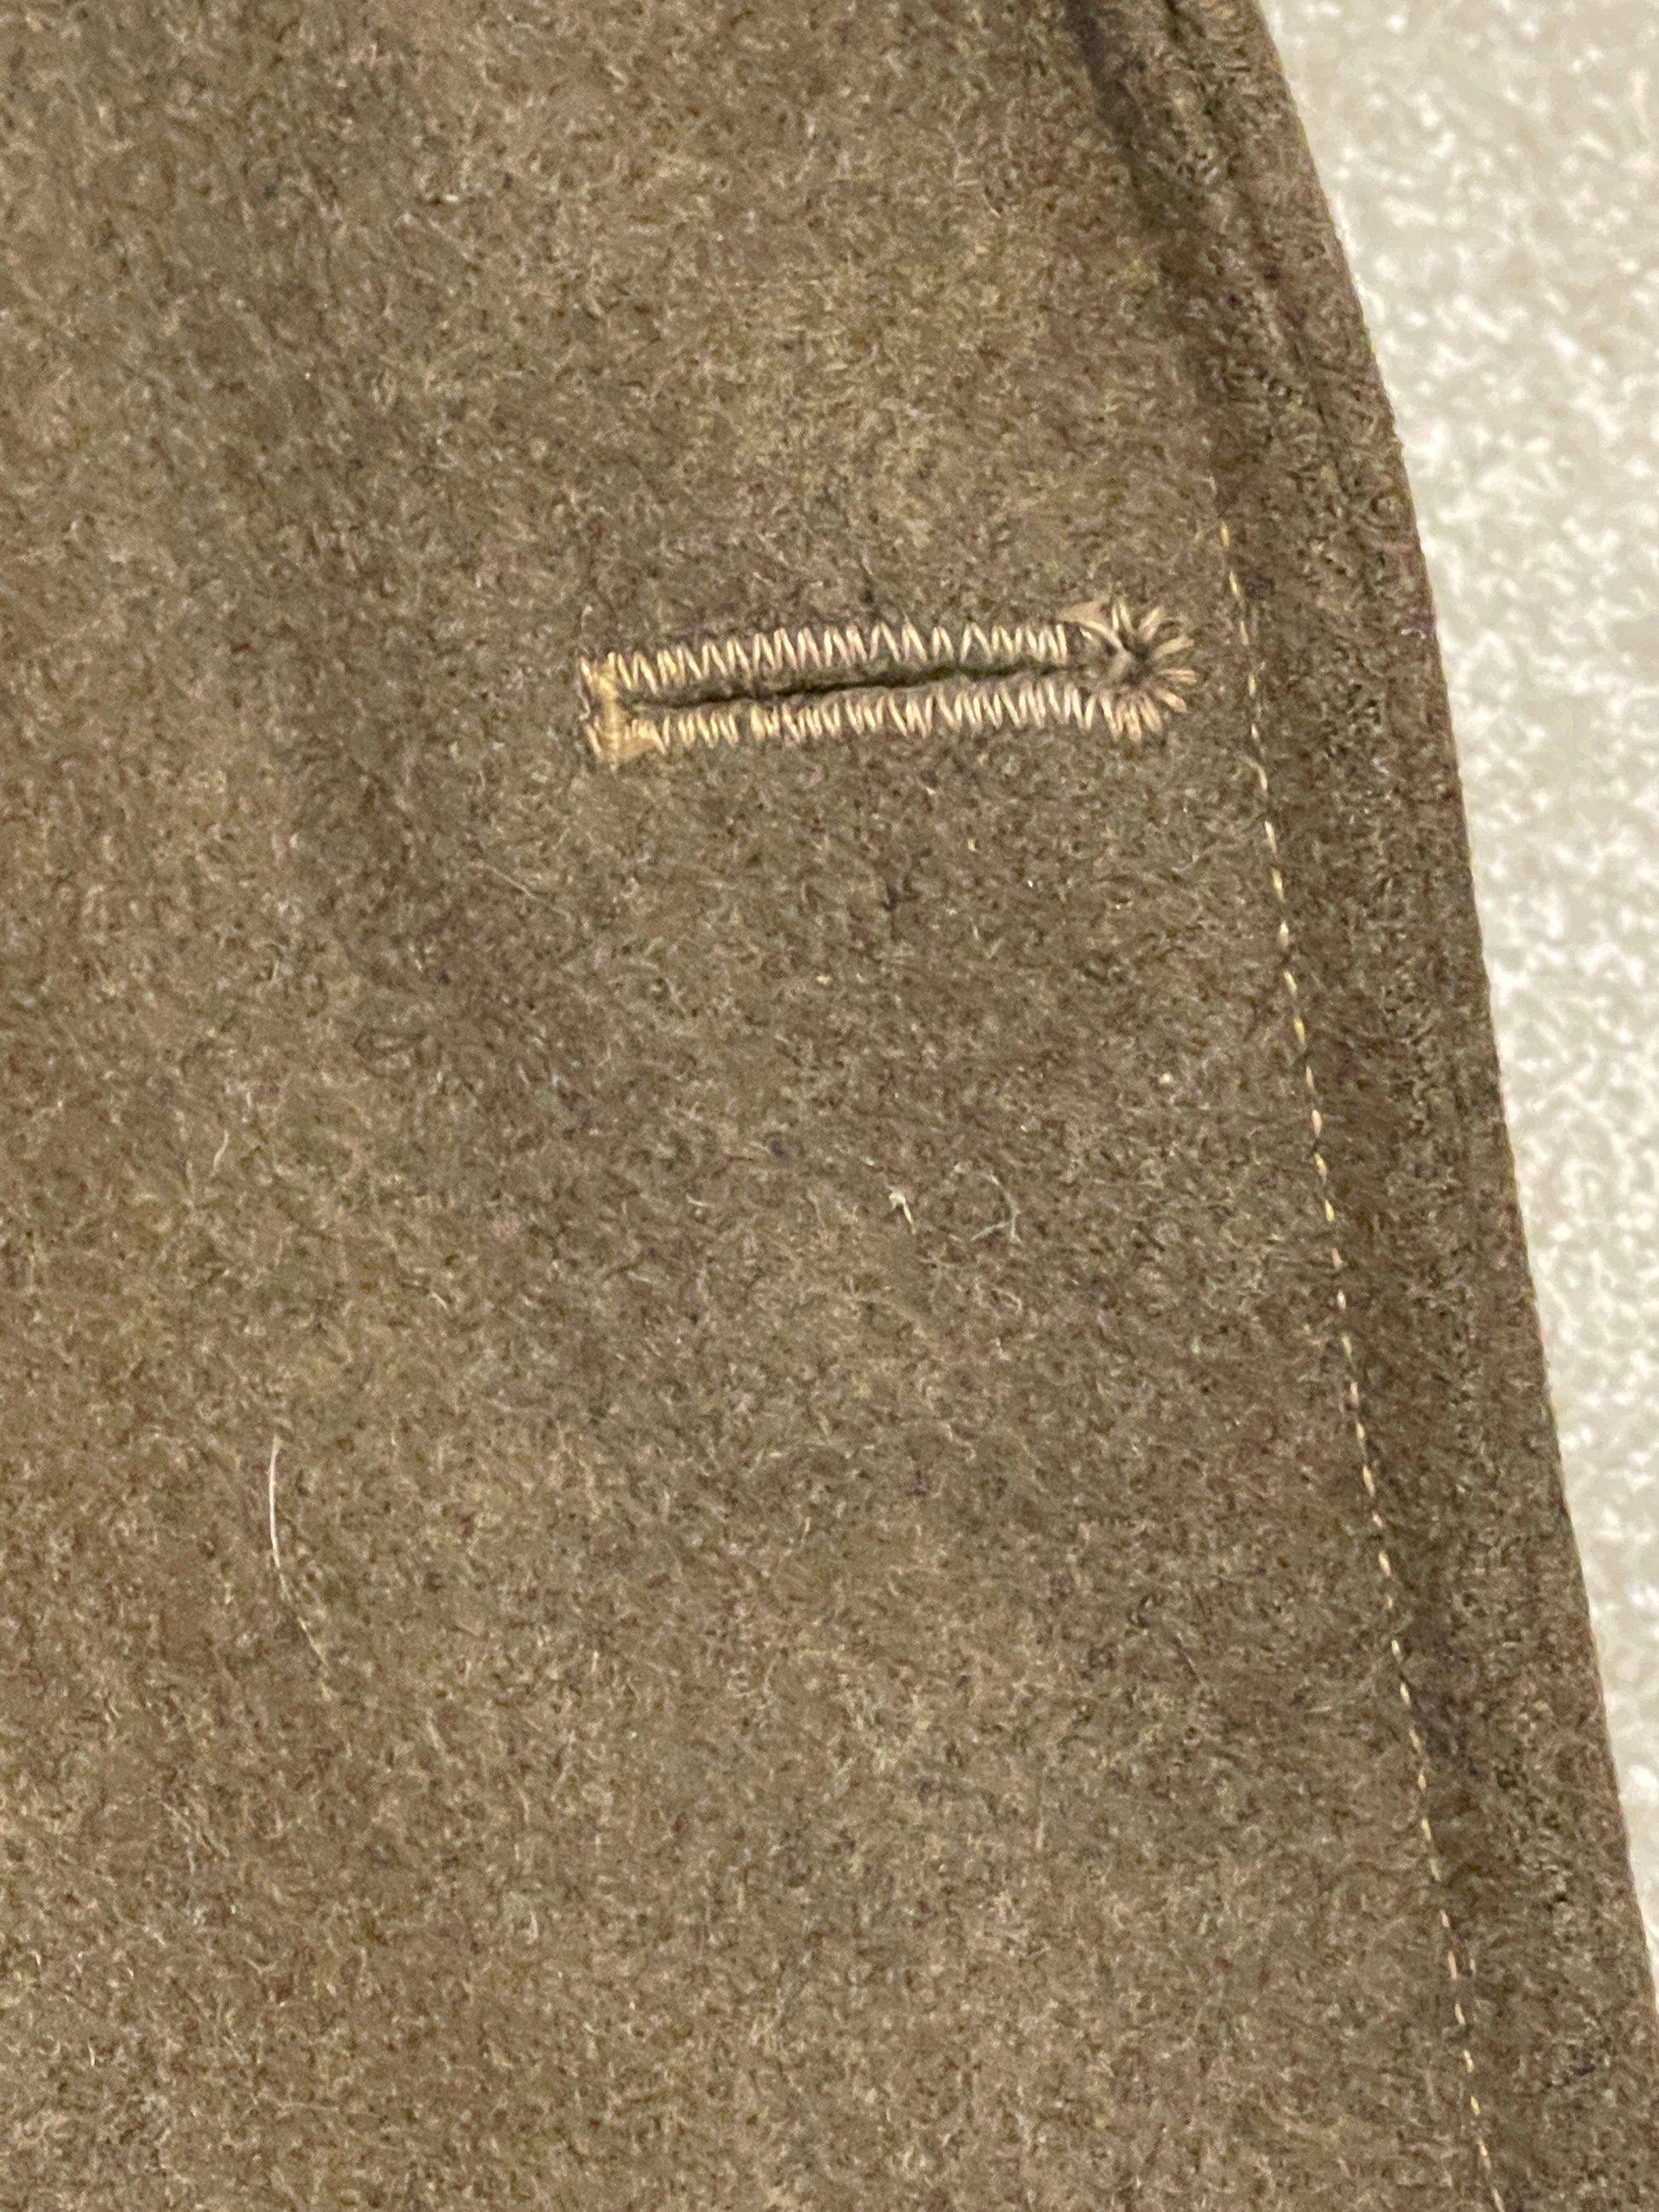 British Great Coat Dismounted 1940 Pattern shoulder